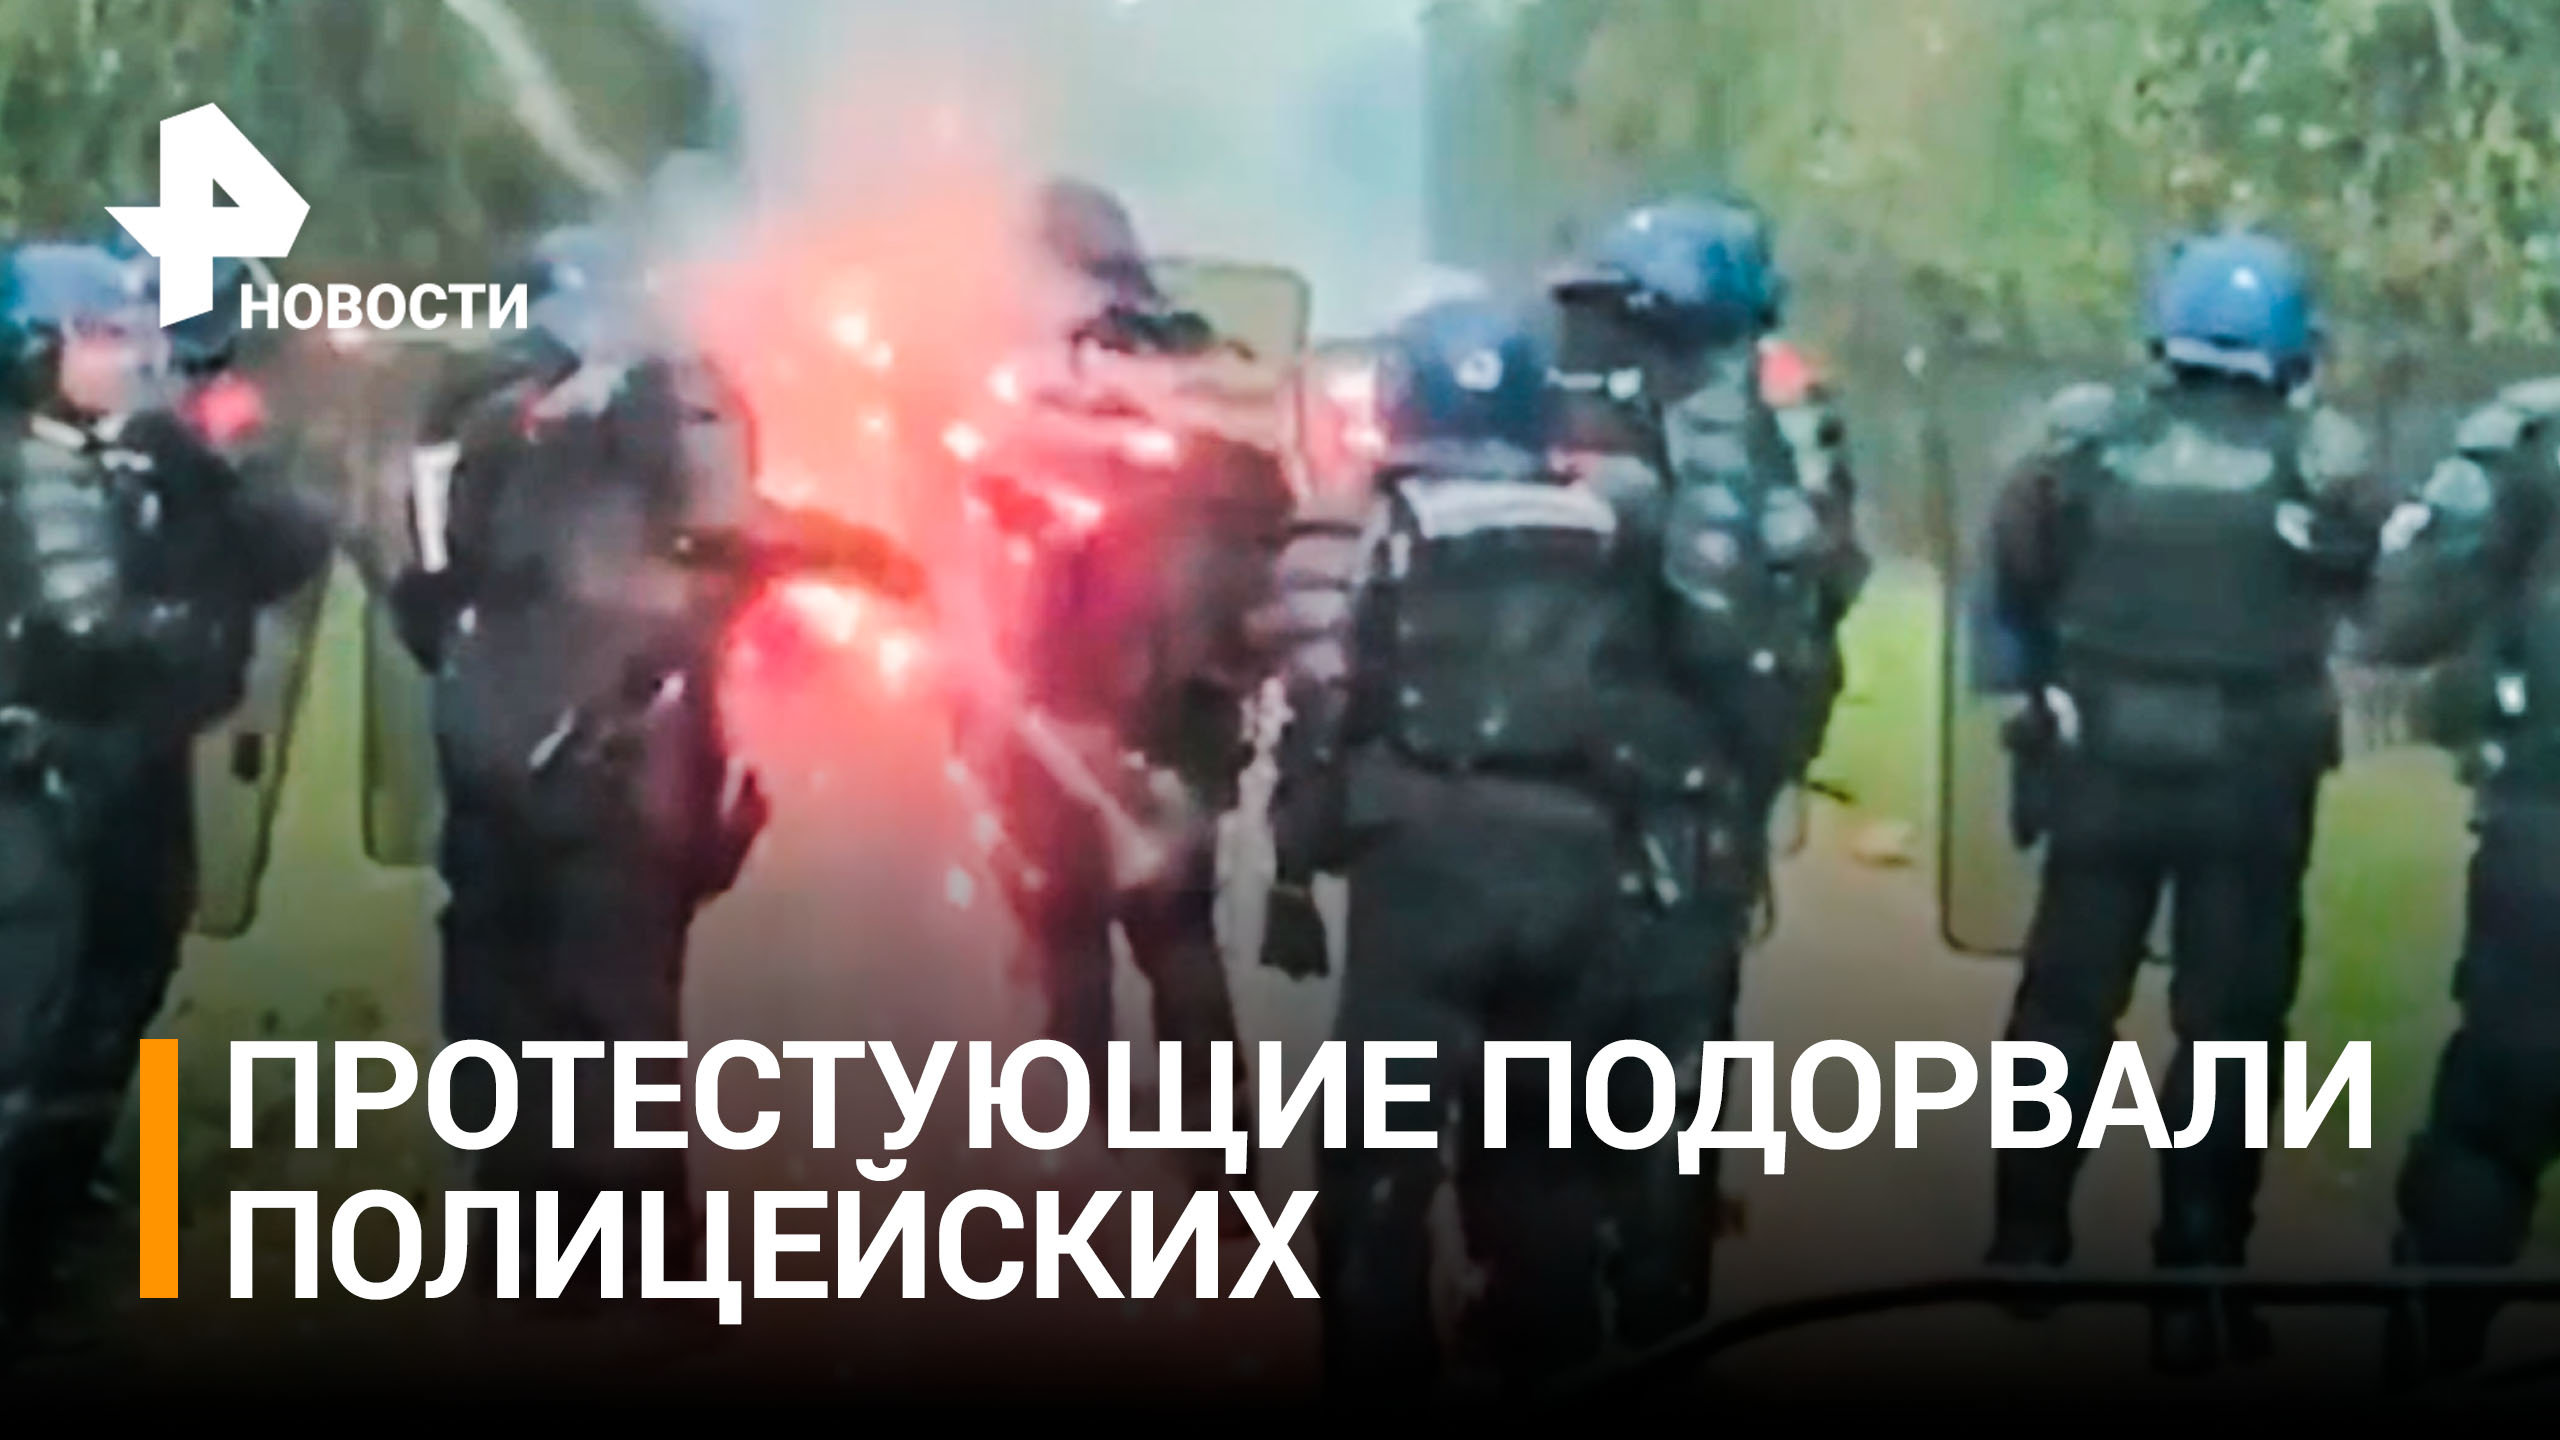 Митингующие забросали полицейских коктейлями Молотова во Франции / РЕН Новости